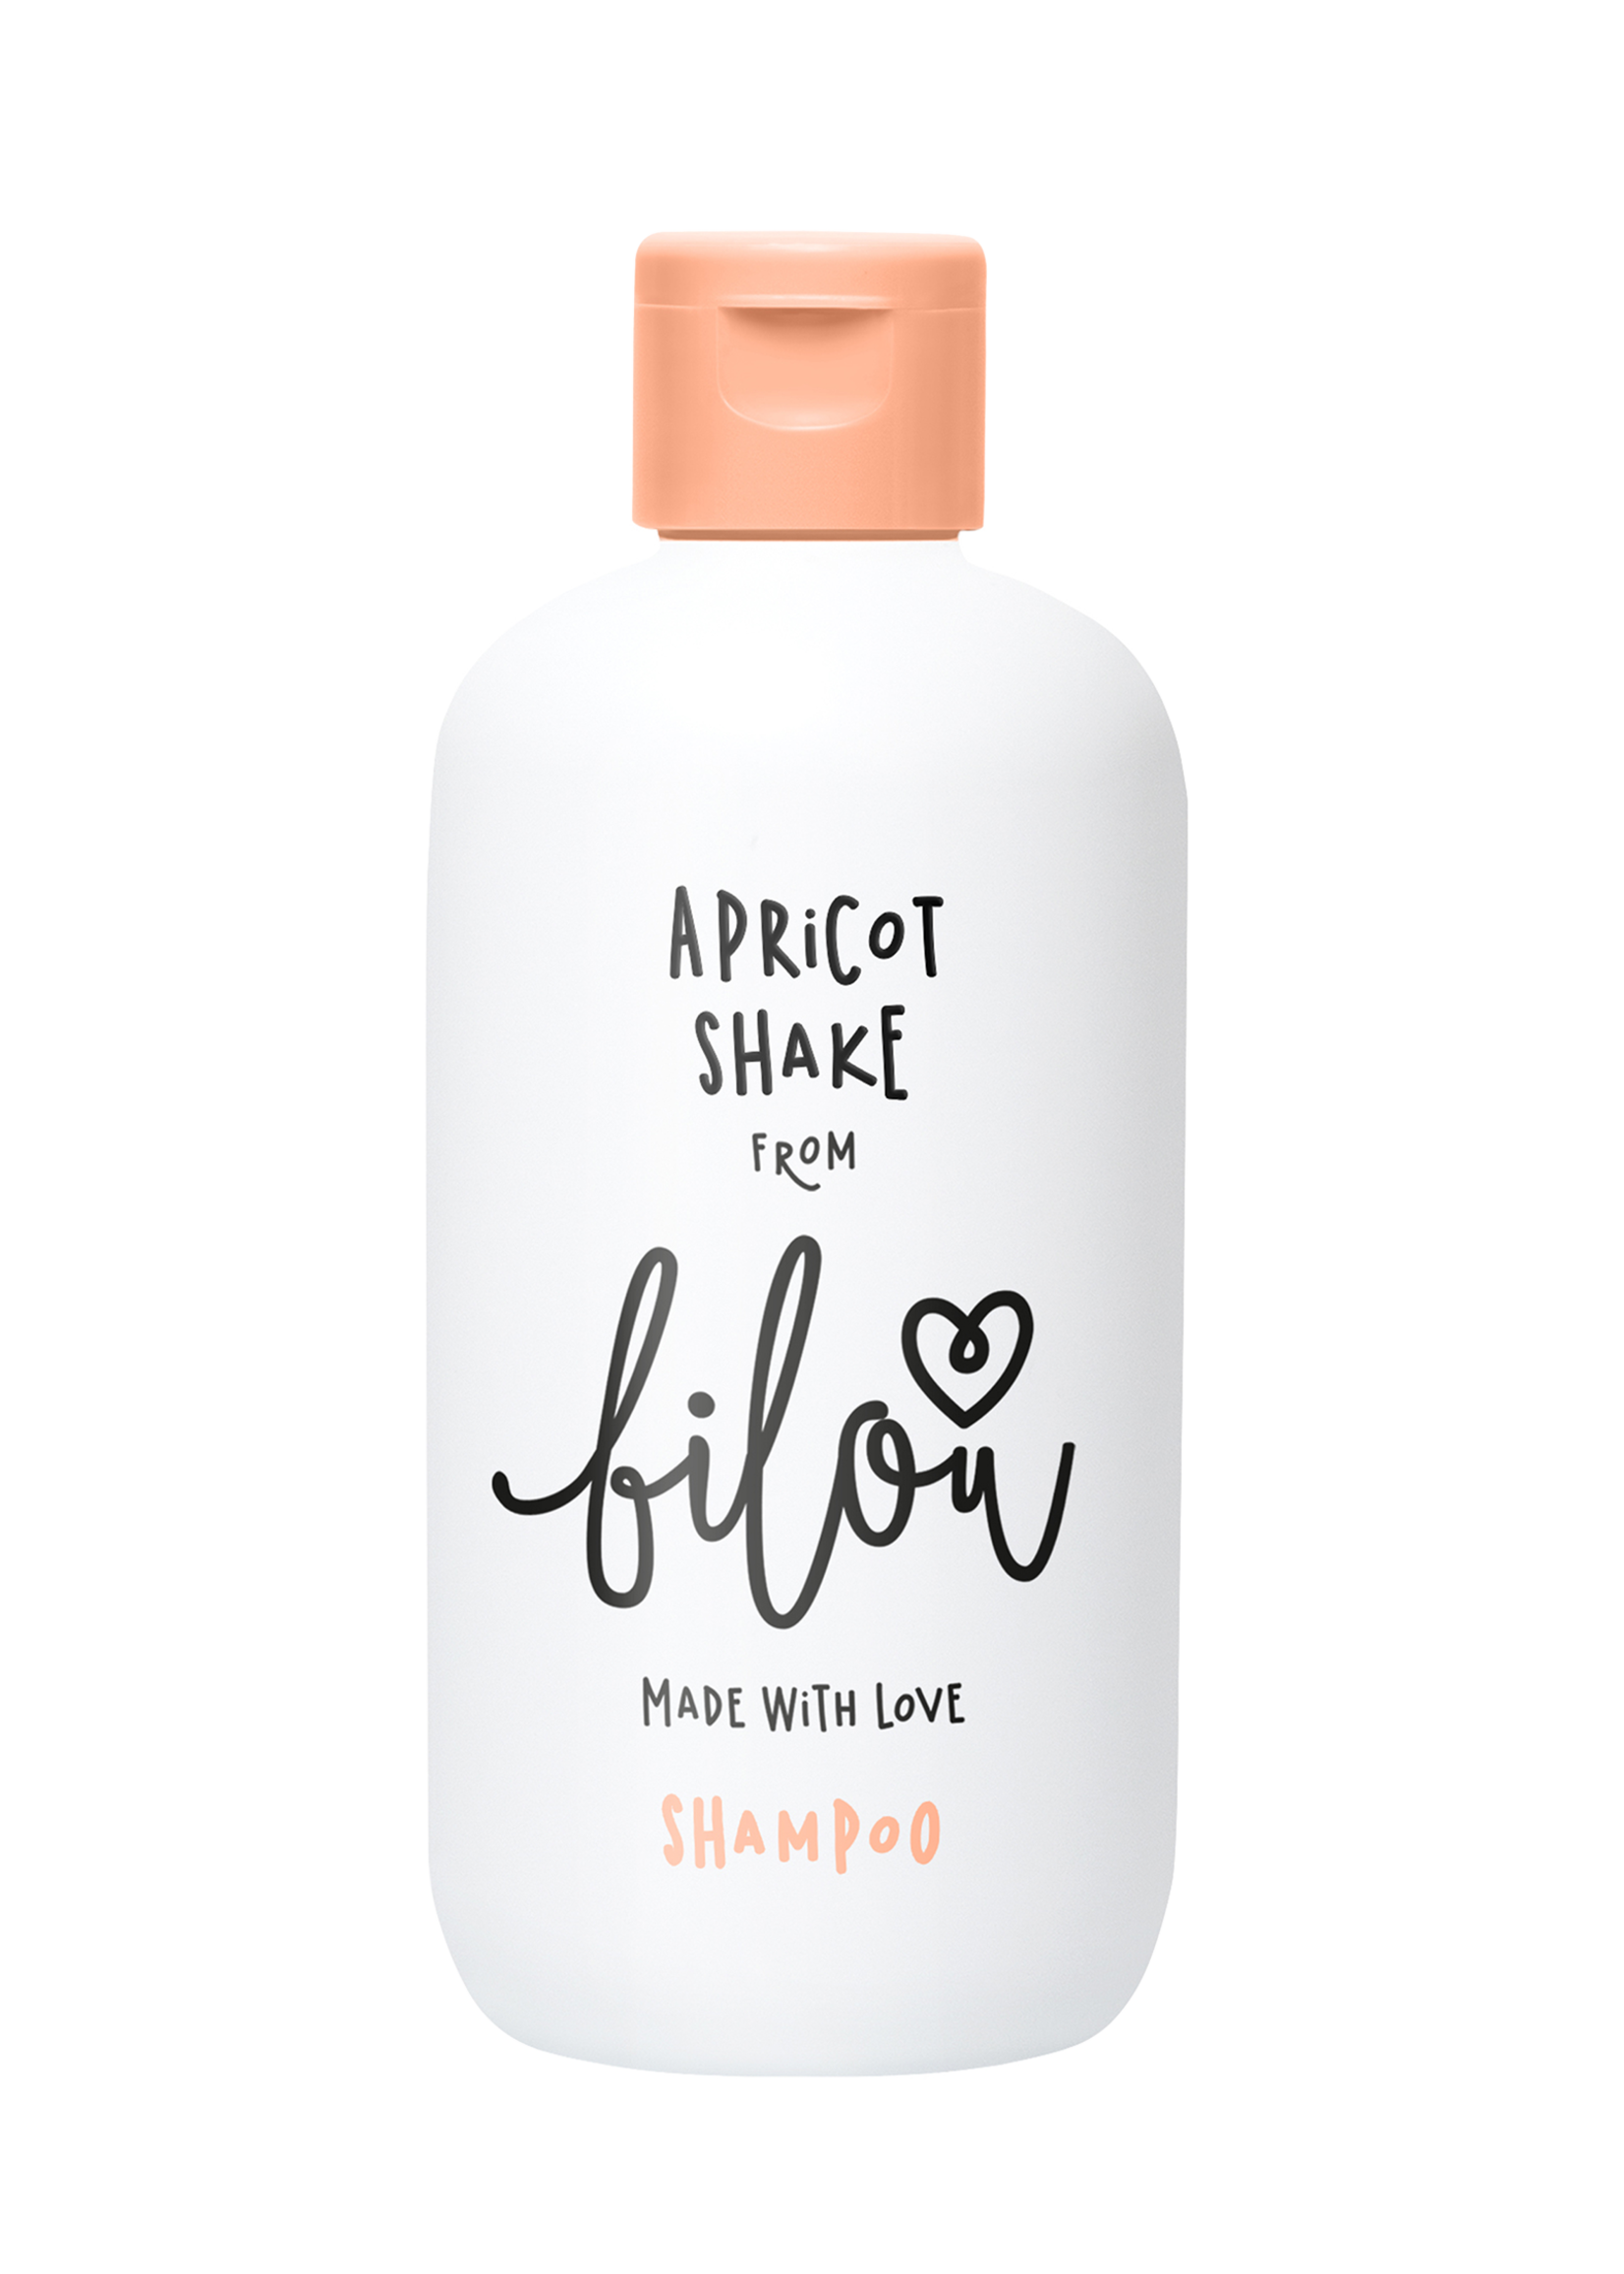 Bilou Shampoo Apricot Shake